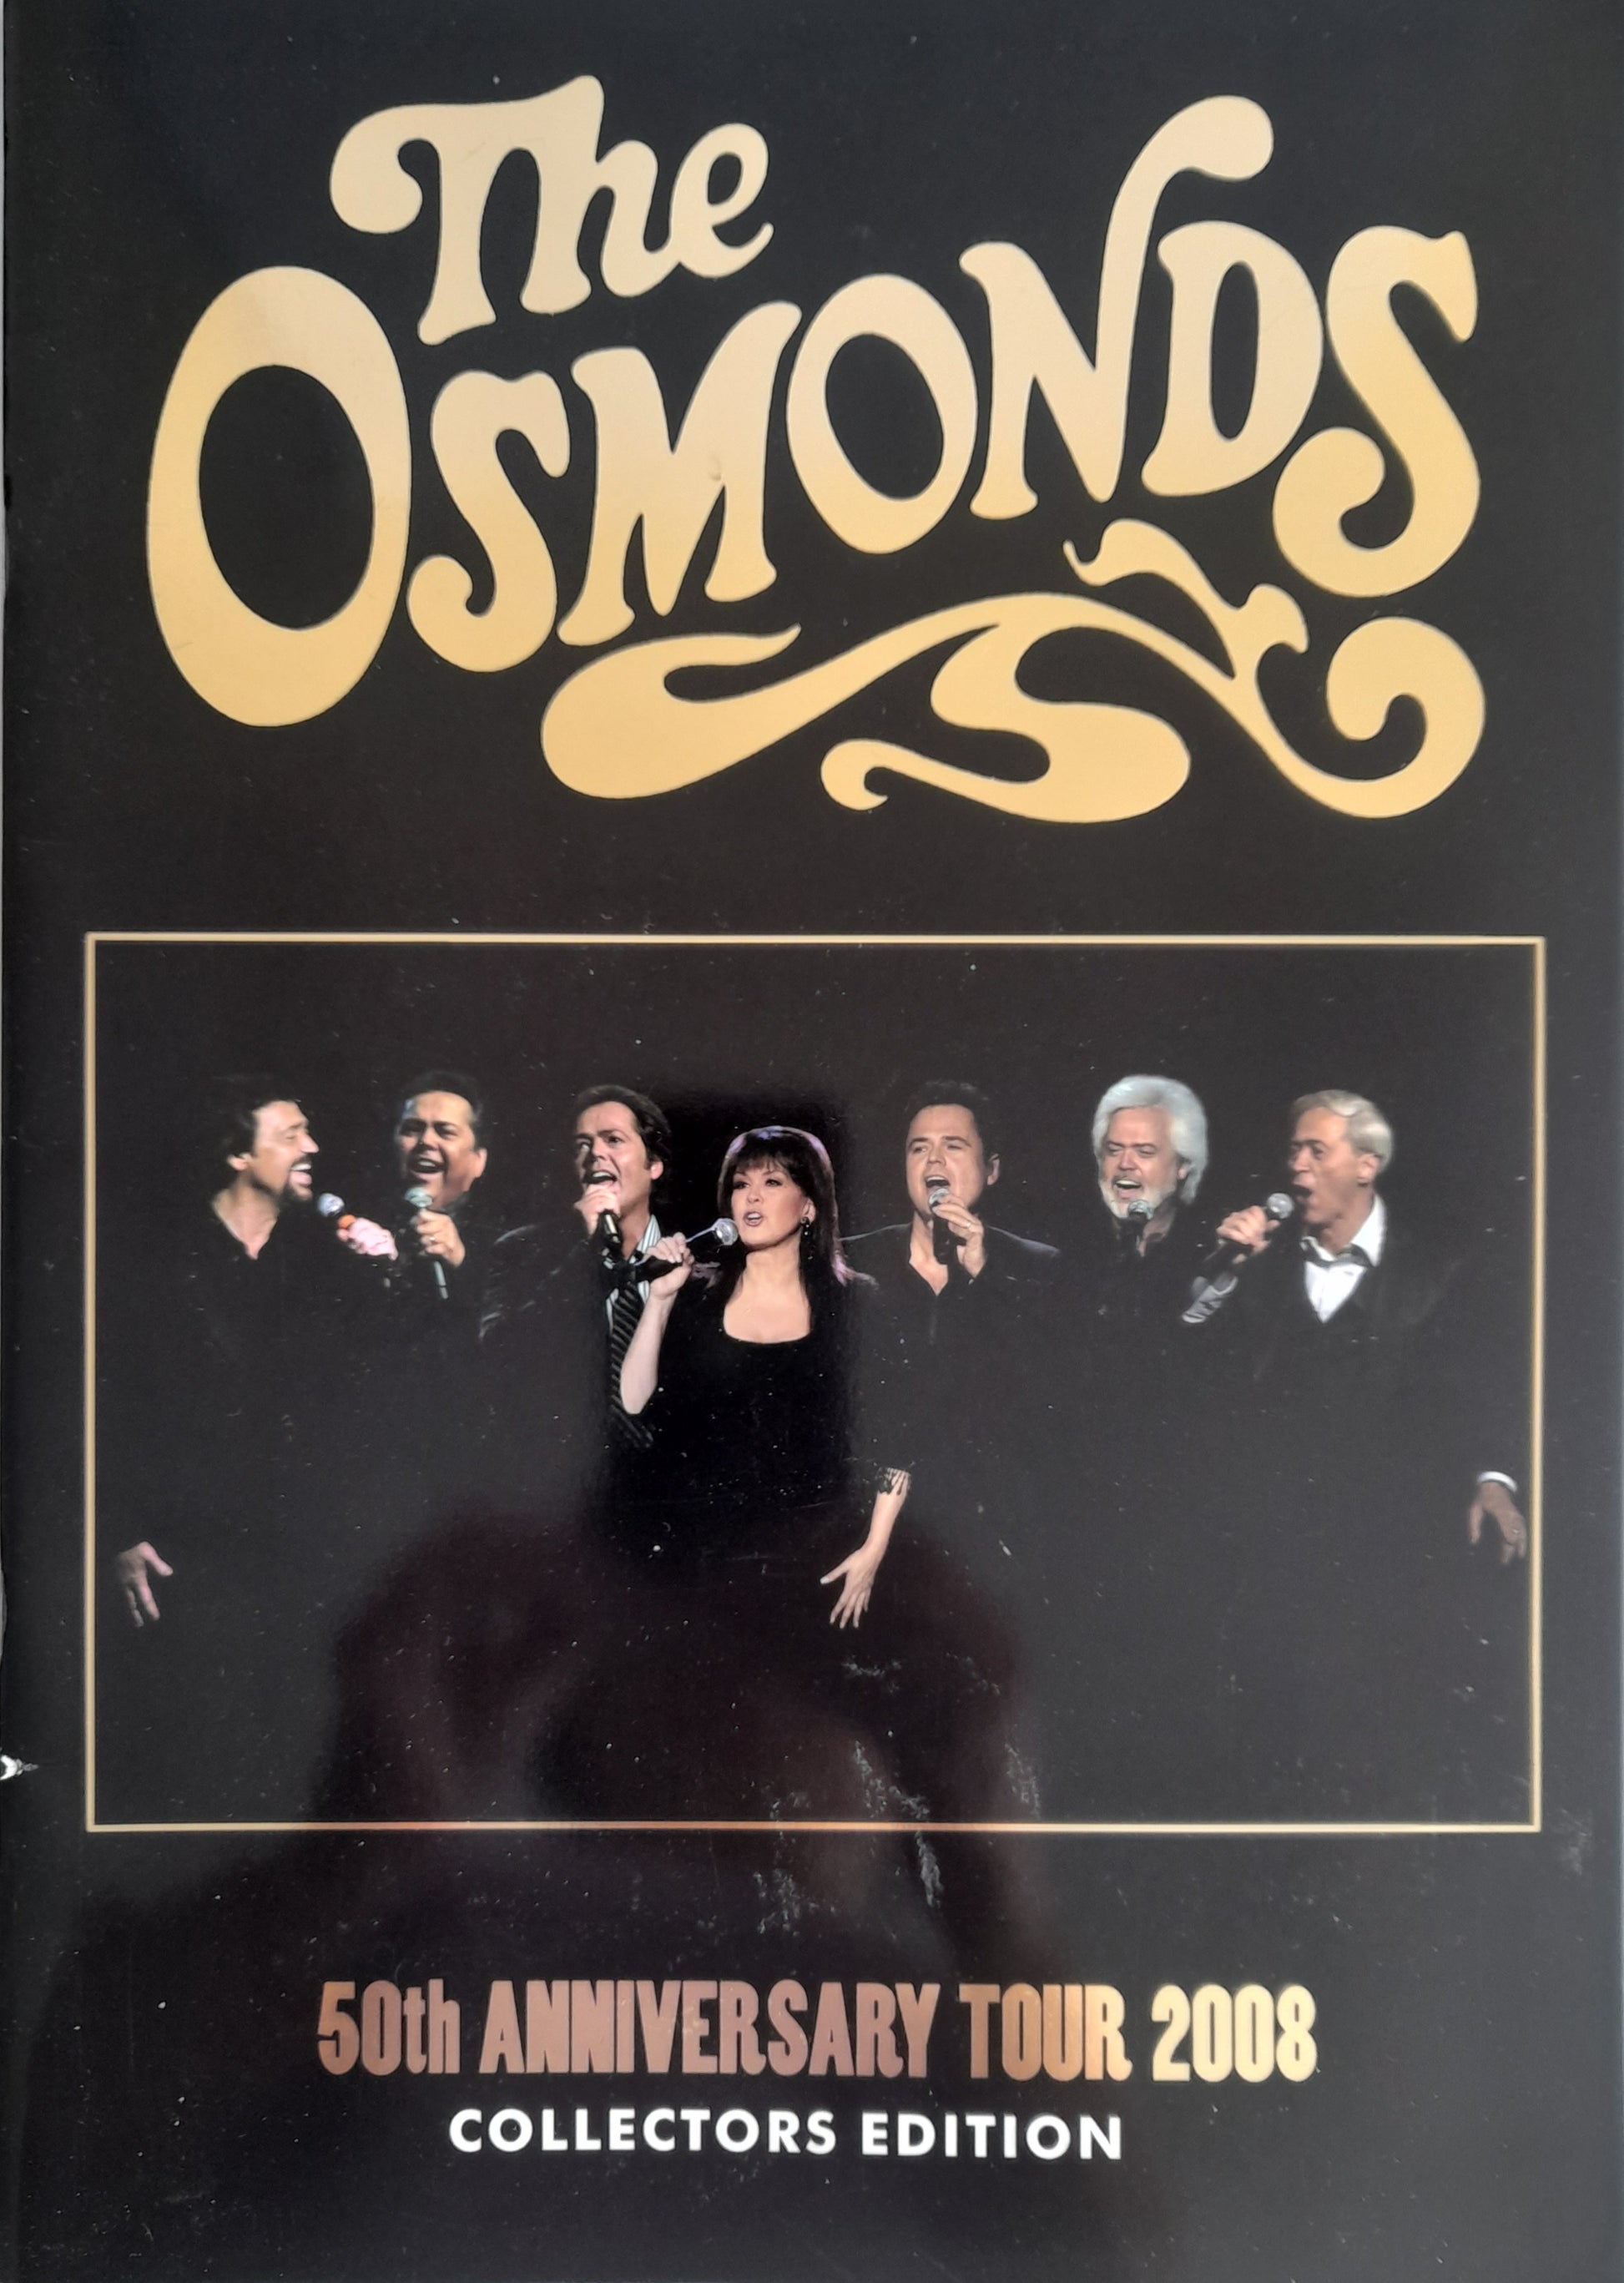 The Osmonds 50th Anniversary Tour Programme